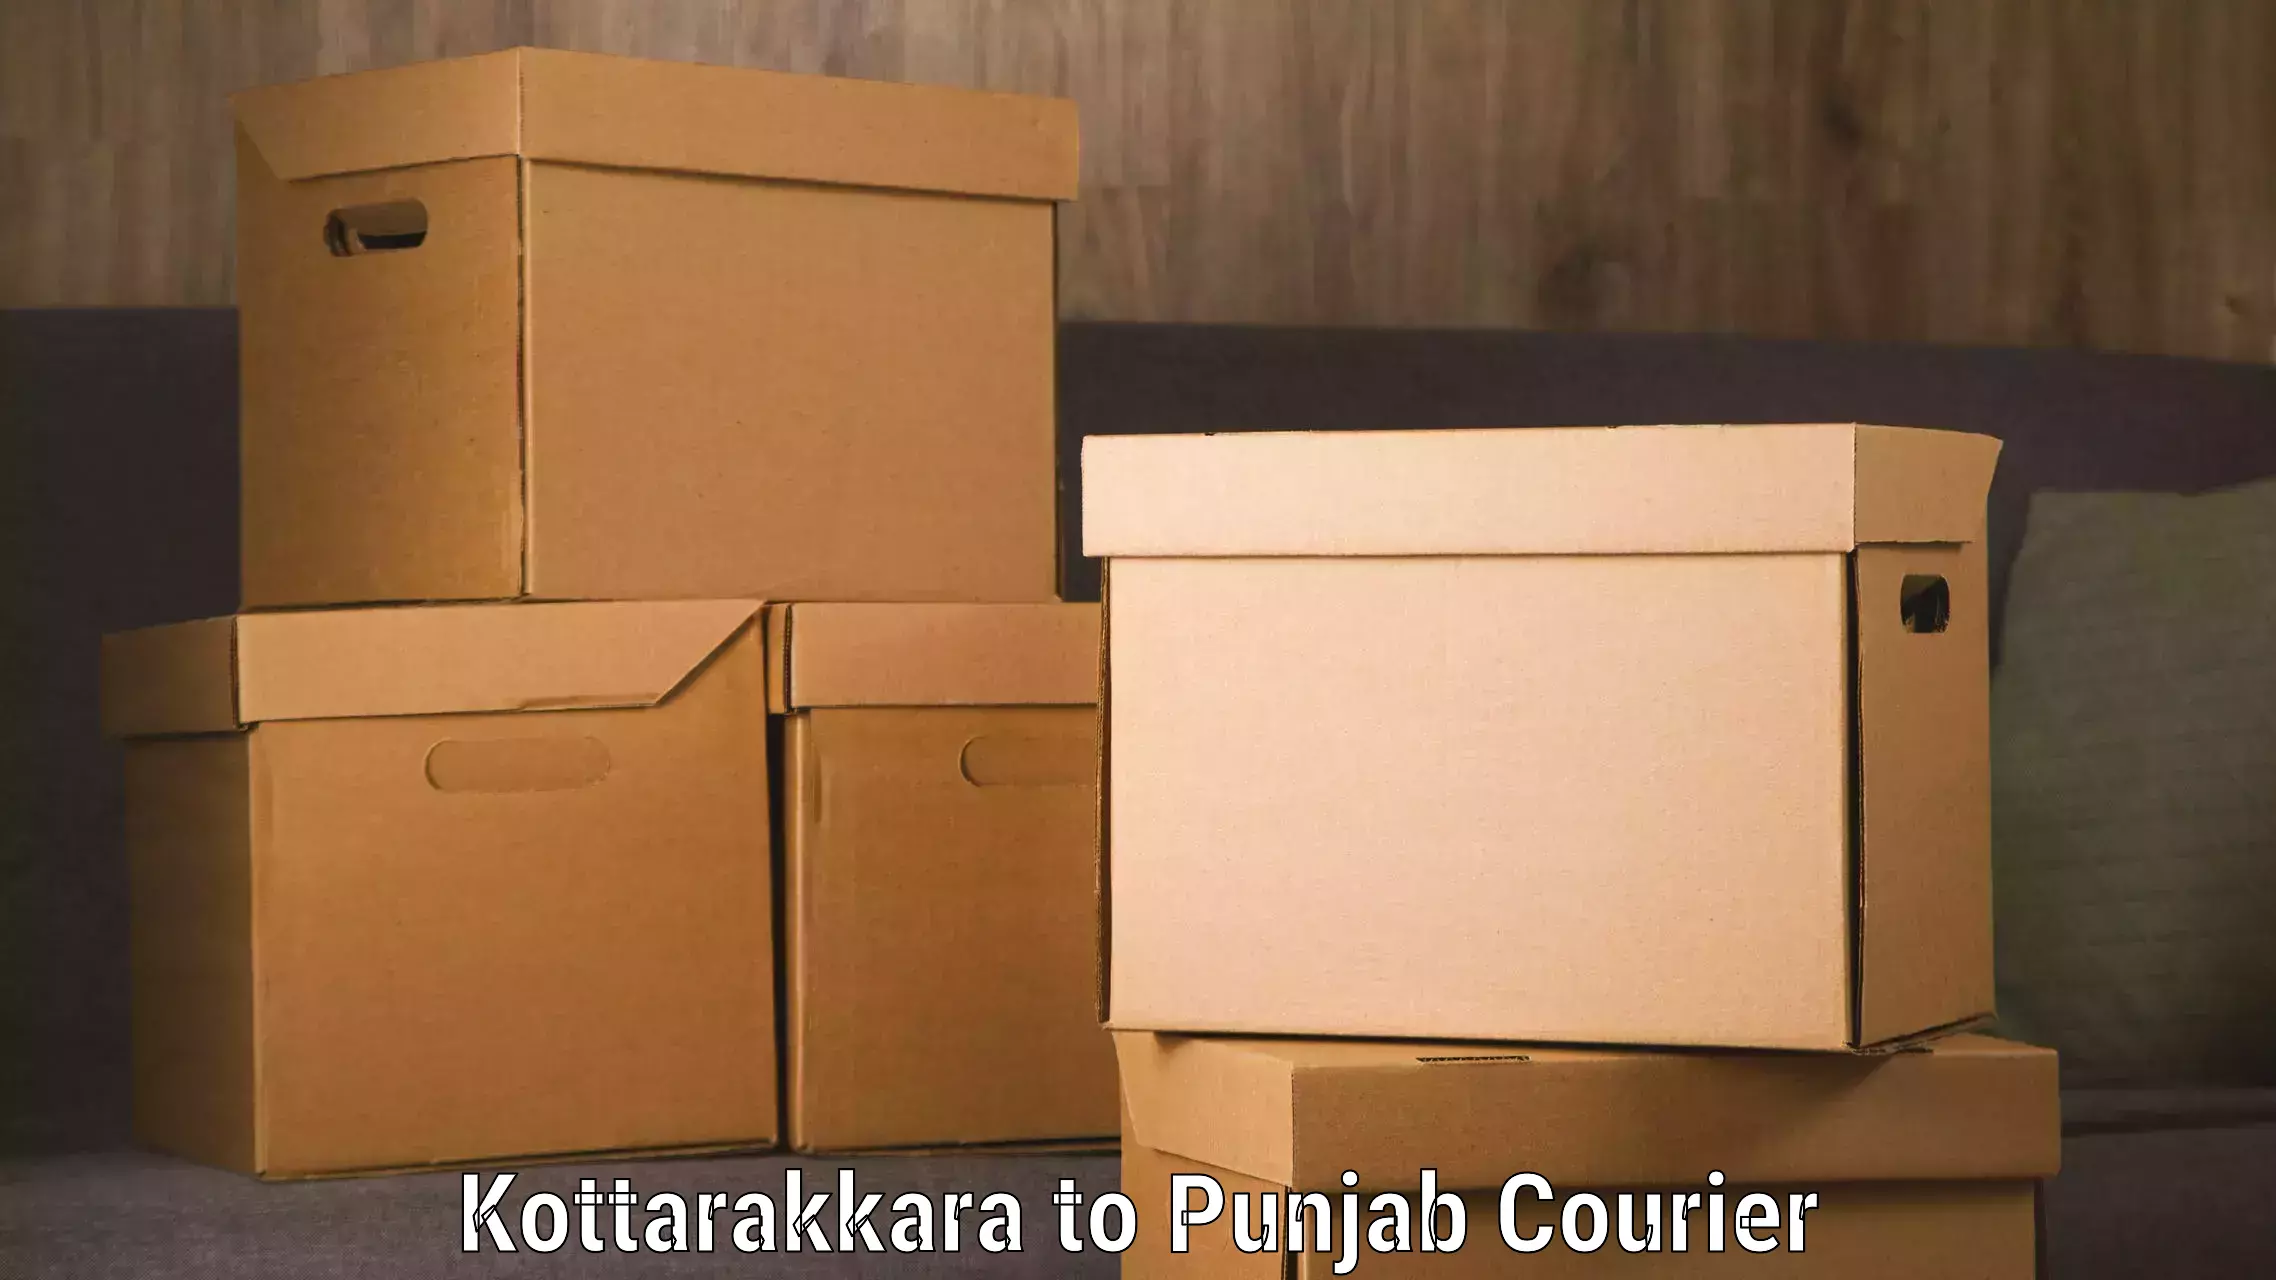 Easy return solutions Kottarakkara to Punjab